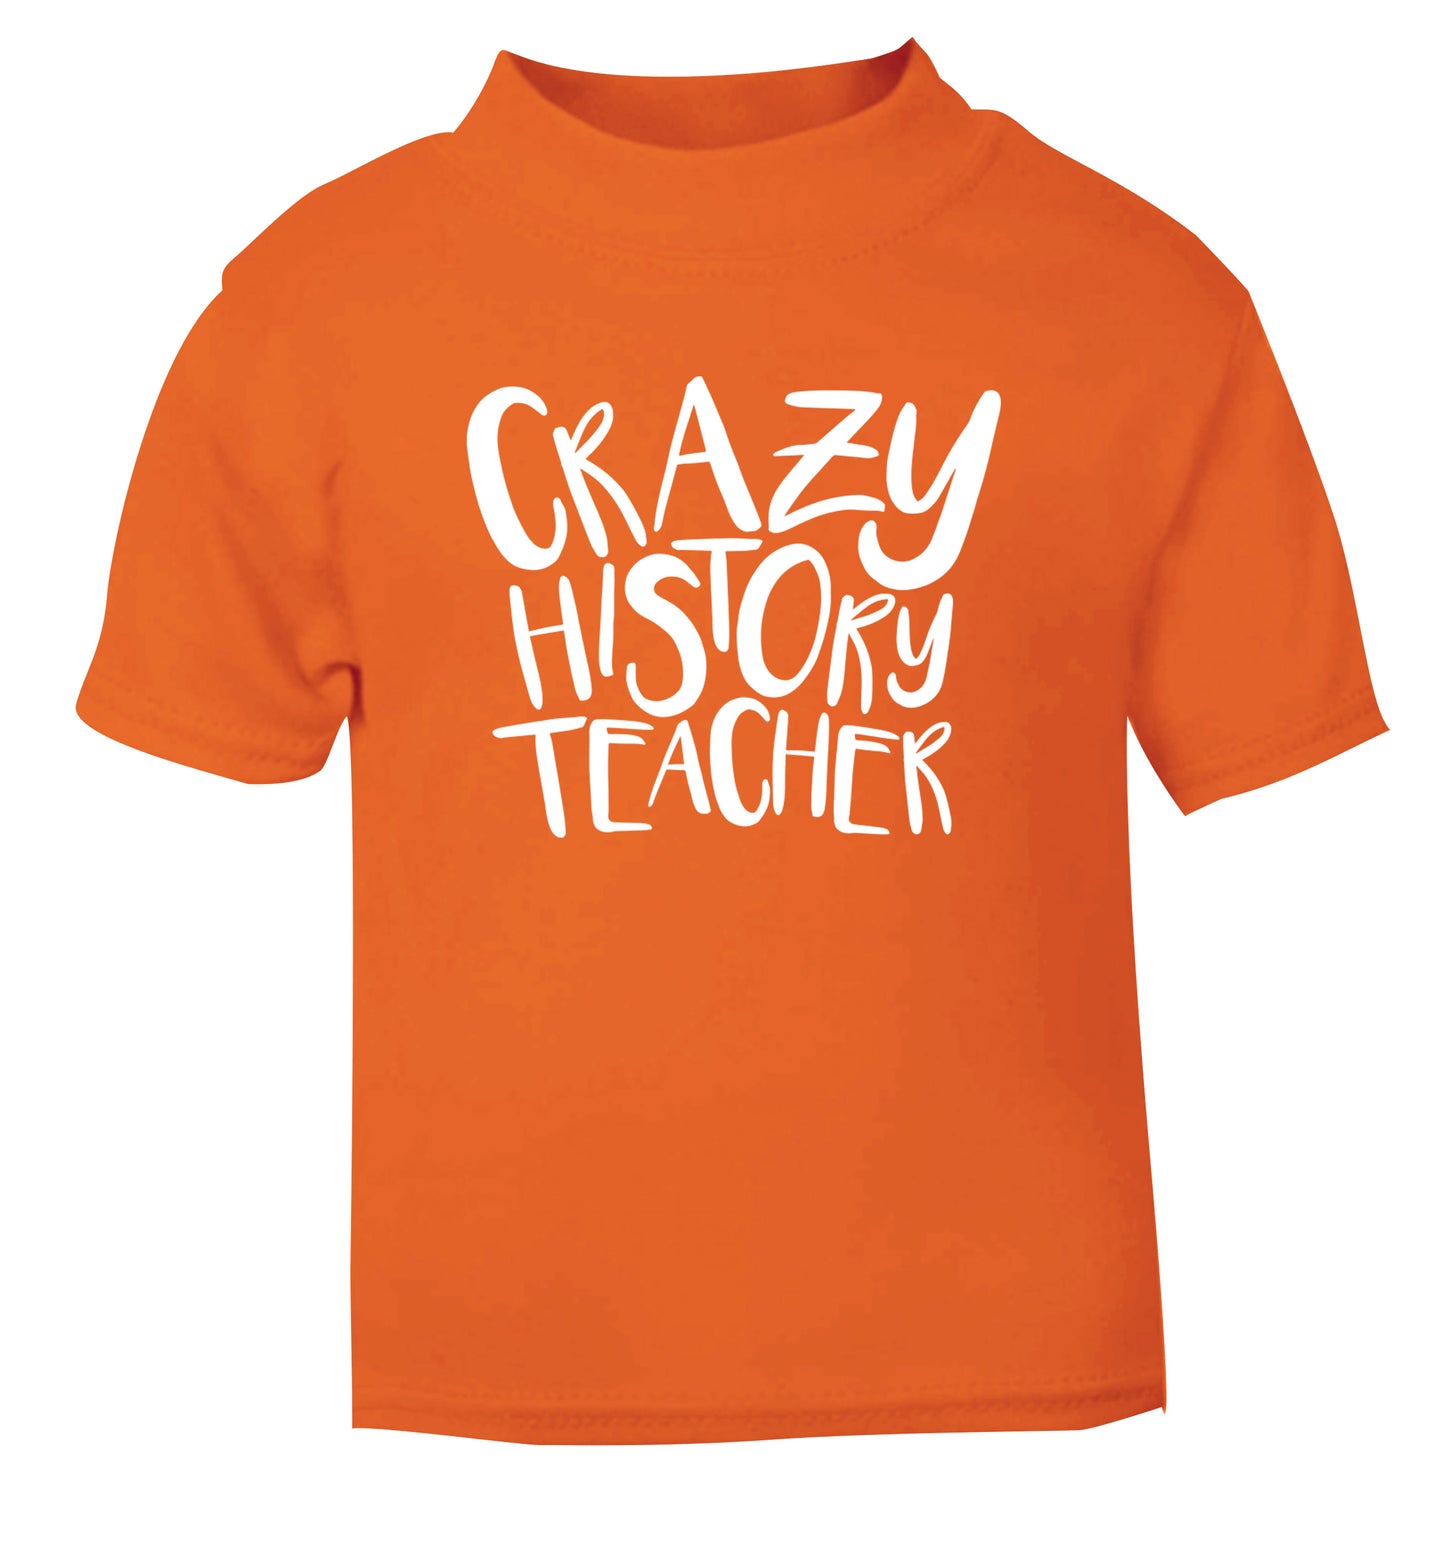 Crazy history teacher orange Baby Toddler Tshirt 2 Years